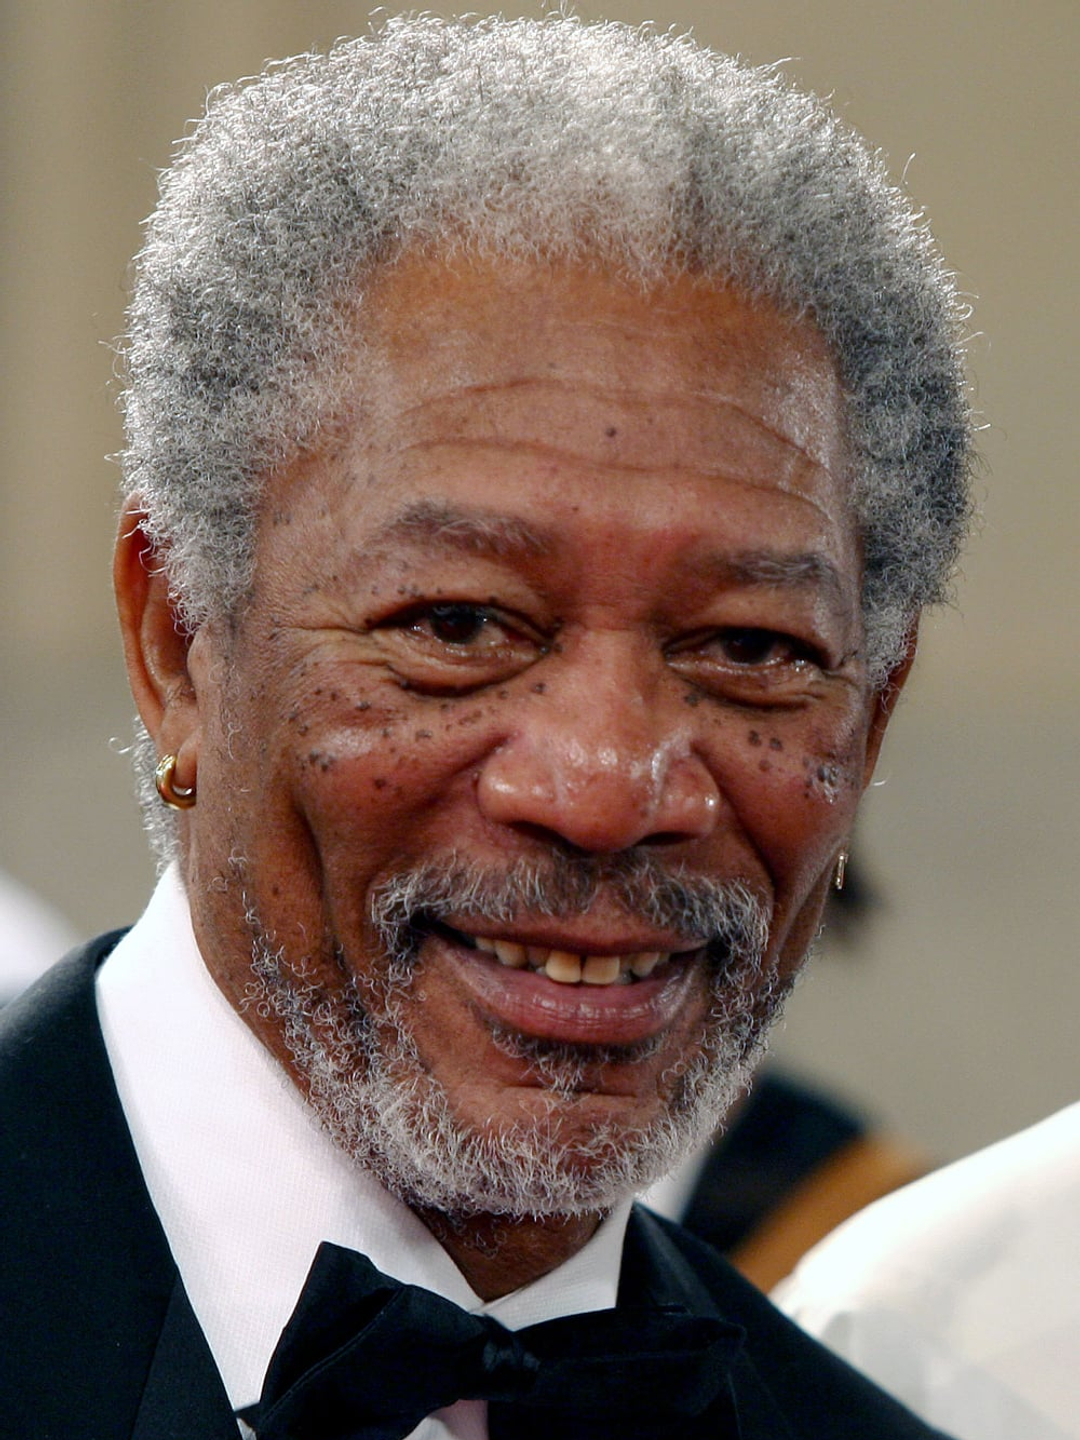 Morgan Freeman appearance